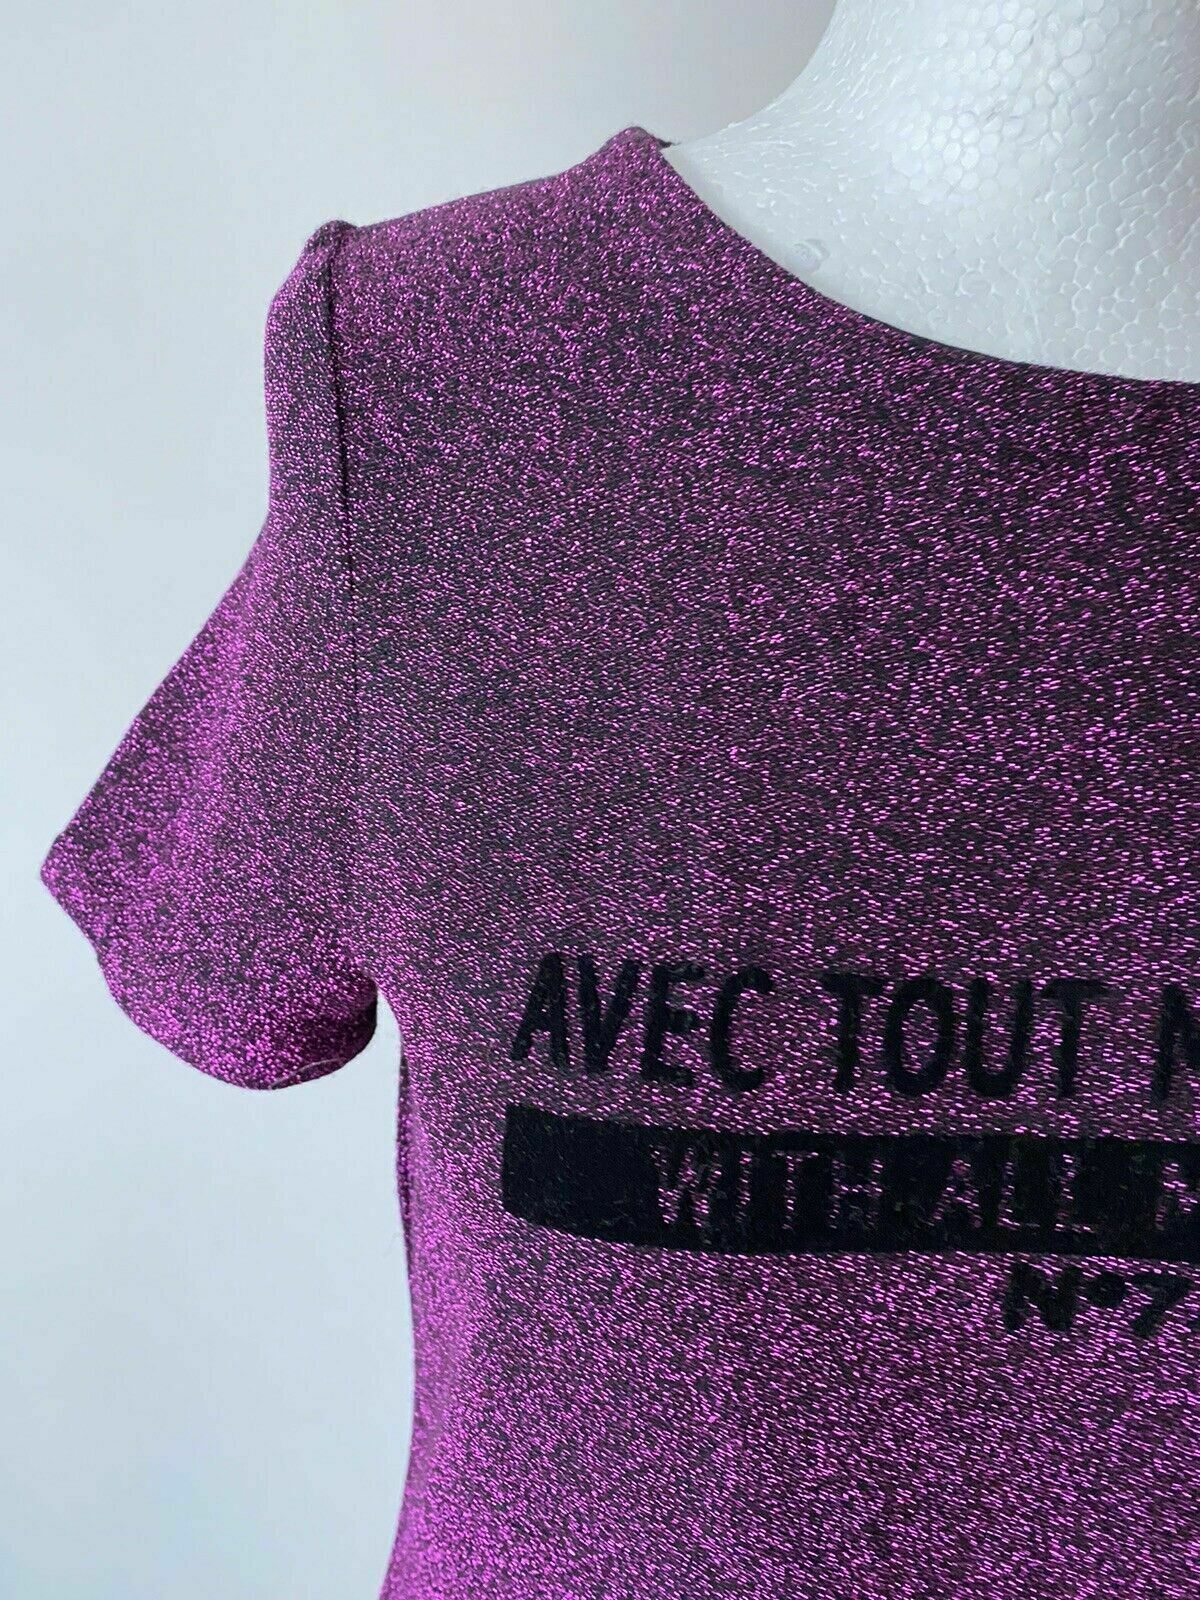 River Island Pink Glitter Slogan T-Shirt Size 8